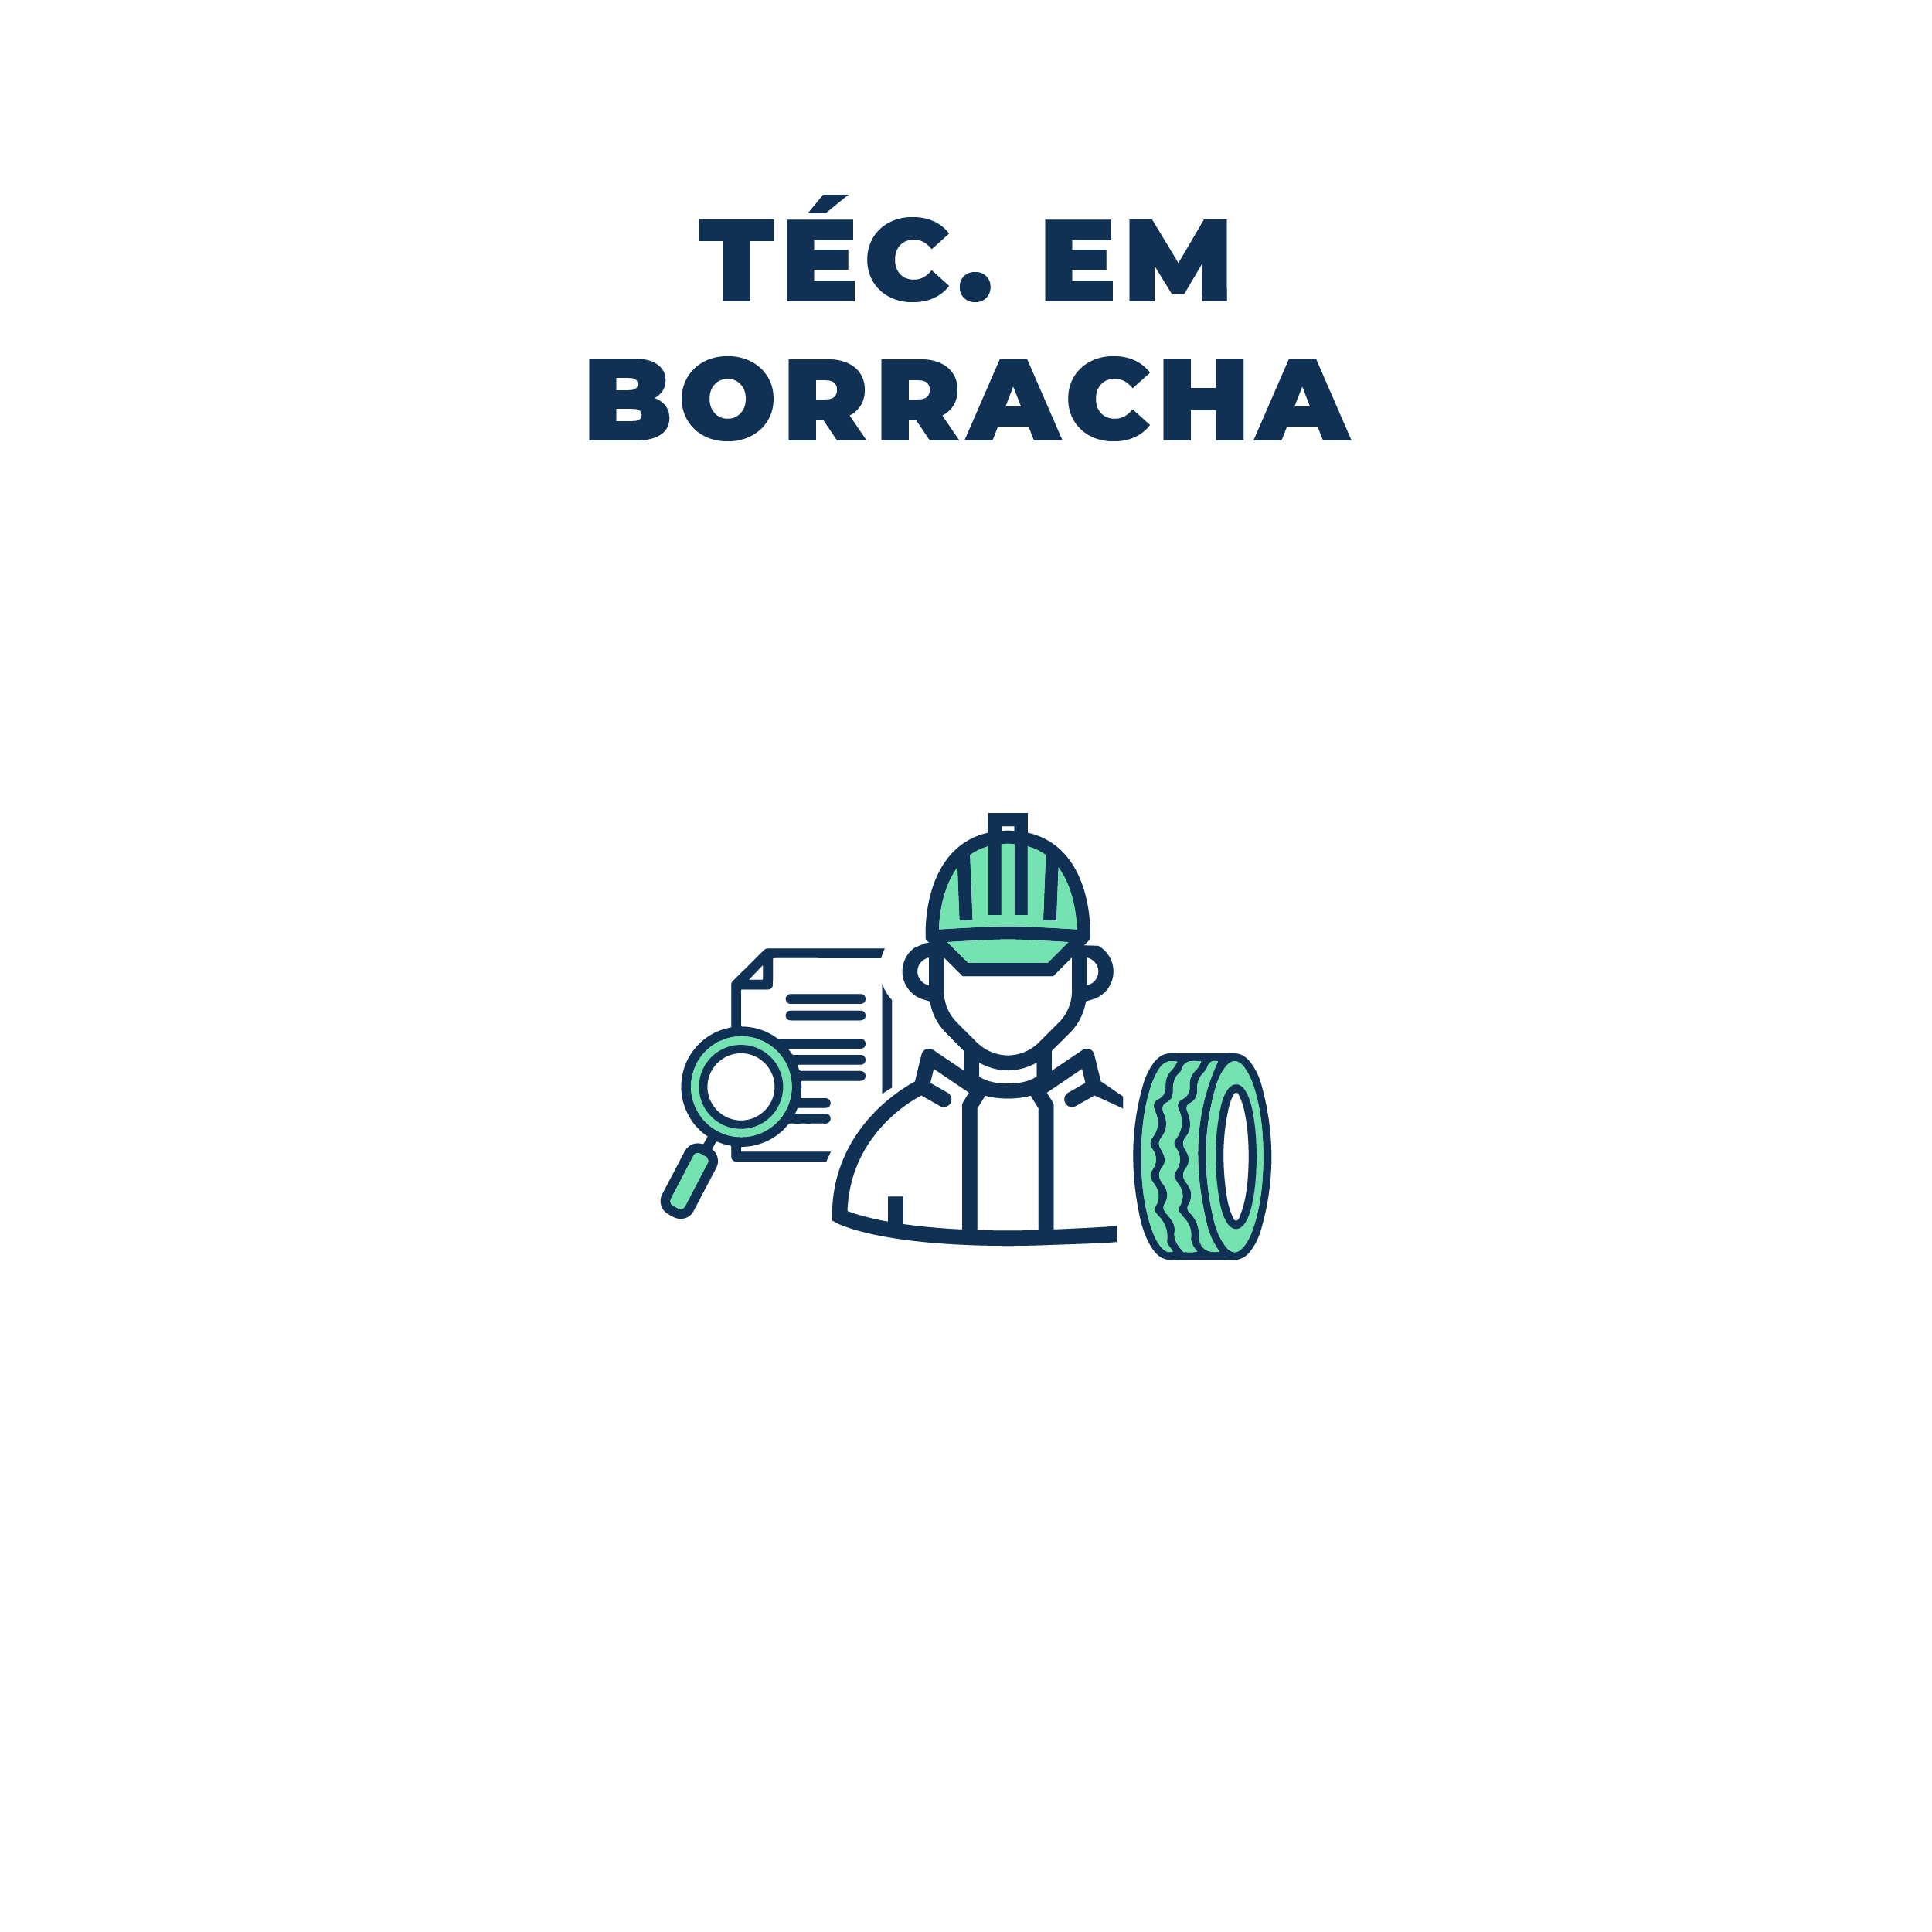 borracha